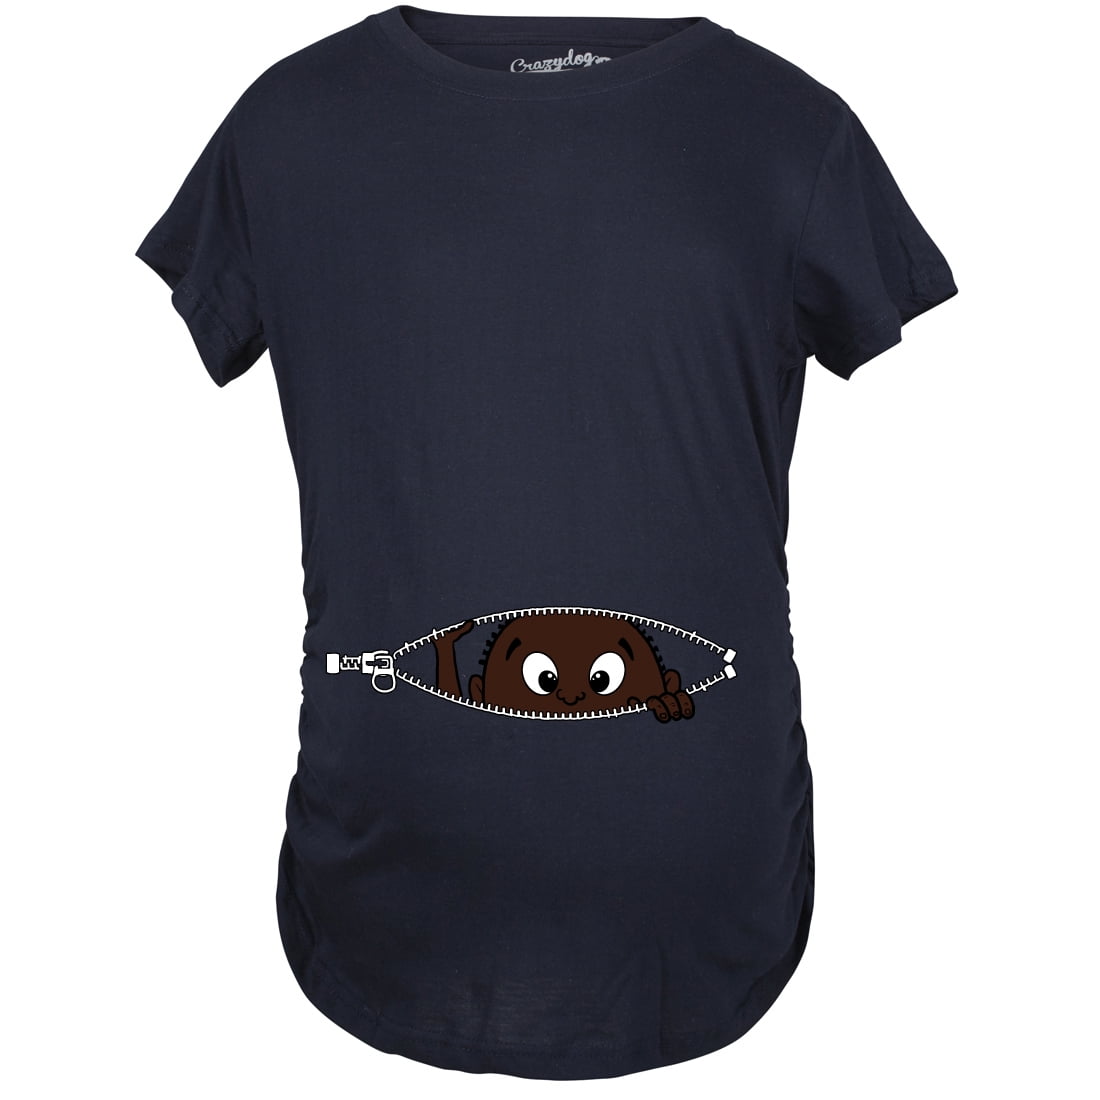 Maternity American Peeking T shirts Pregnancy Annoucement T shirt (Navy) - XXL - Walmart.com